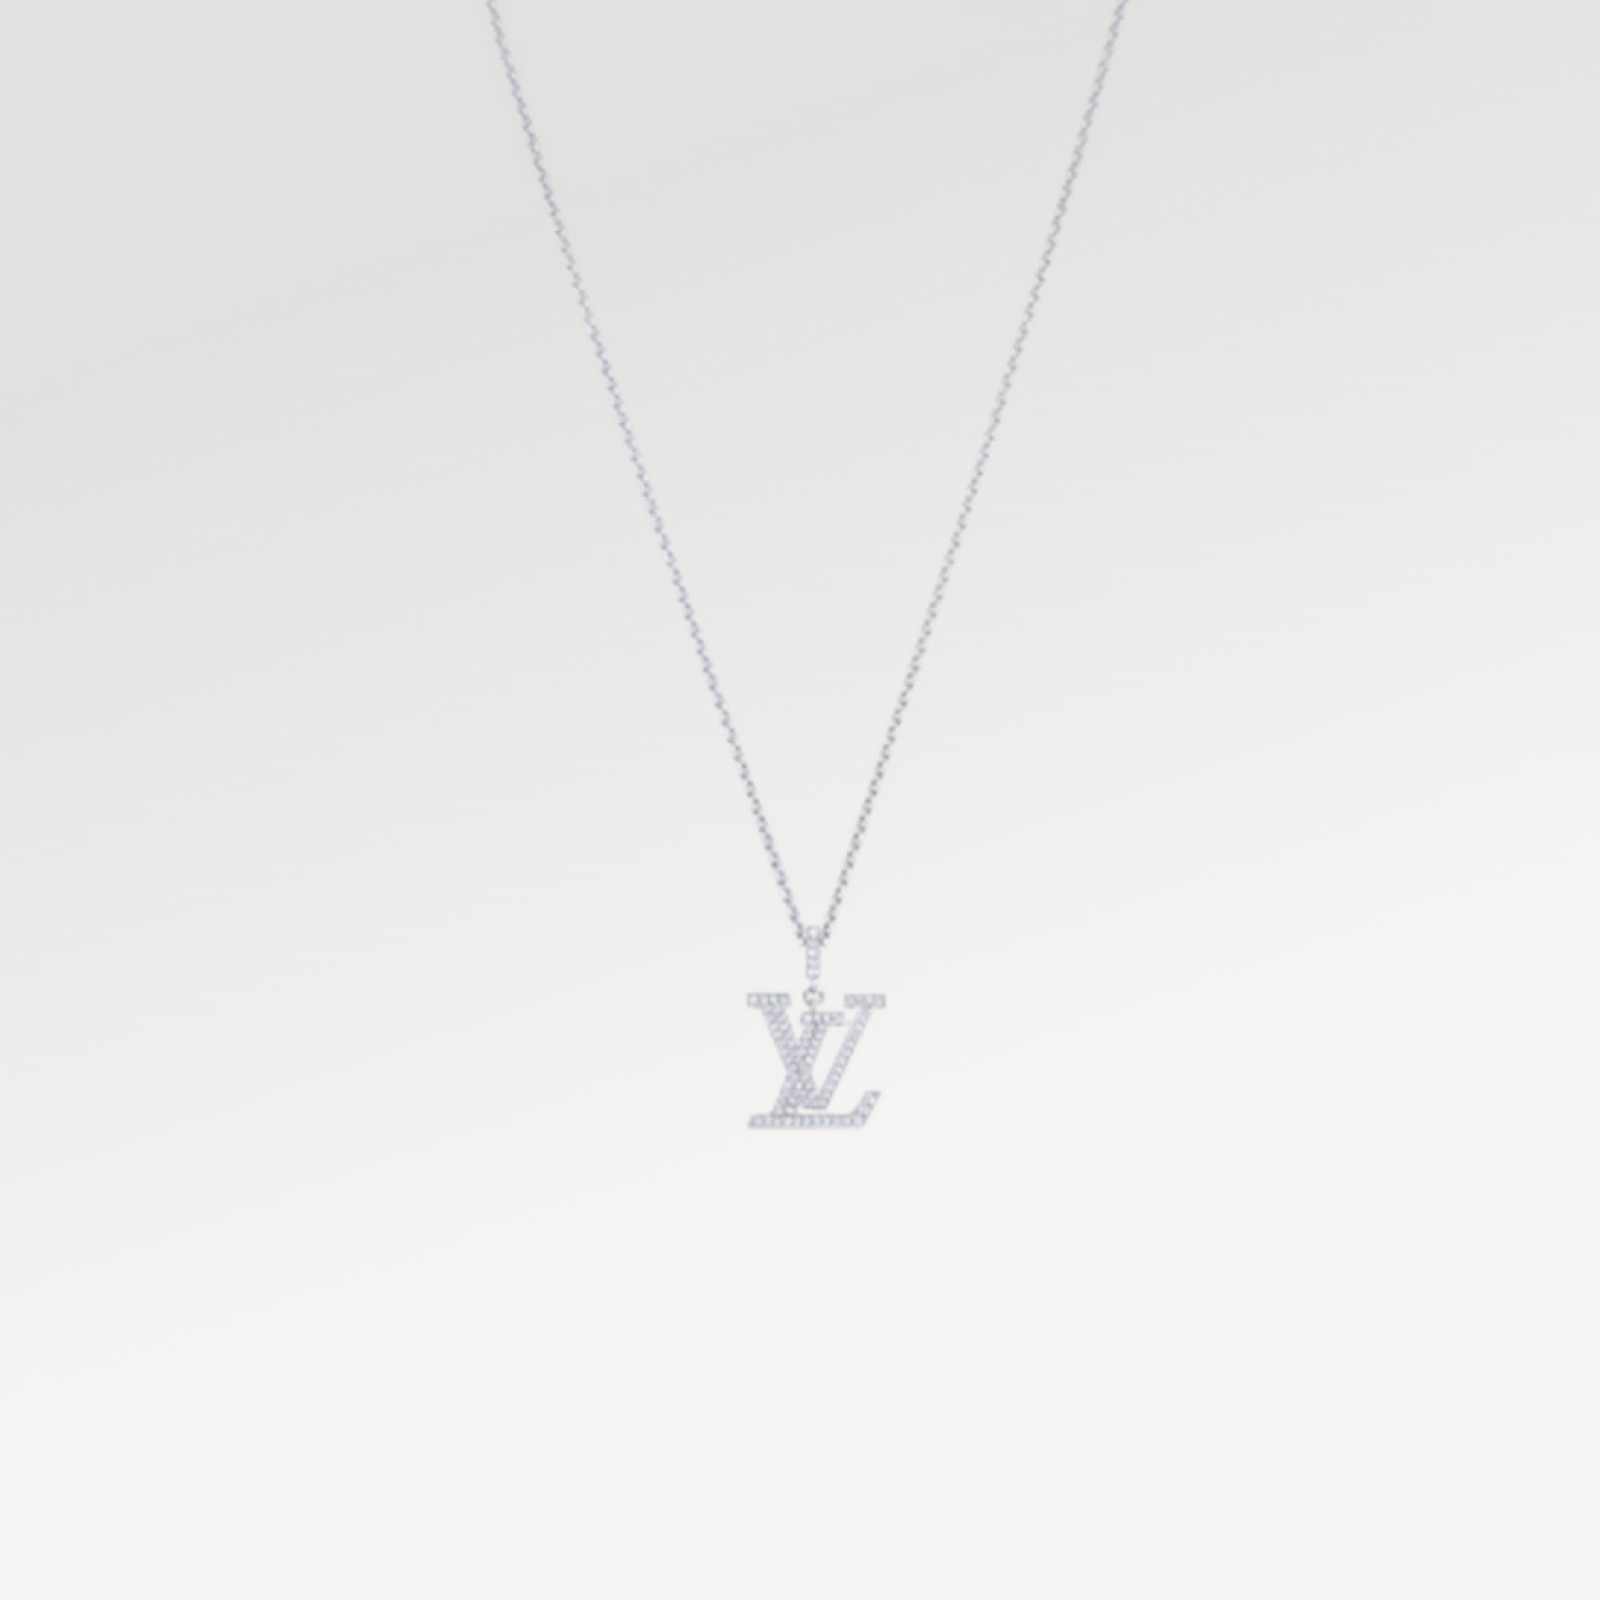 LV Medium Pendant, White Gold And Diamonds